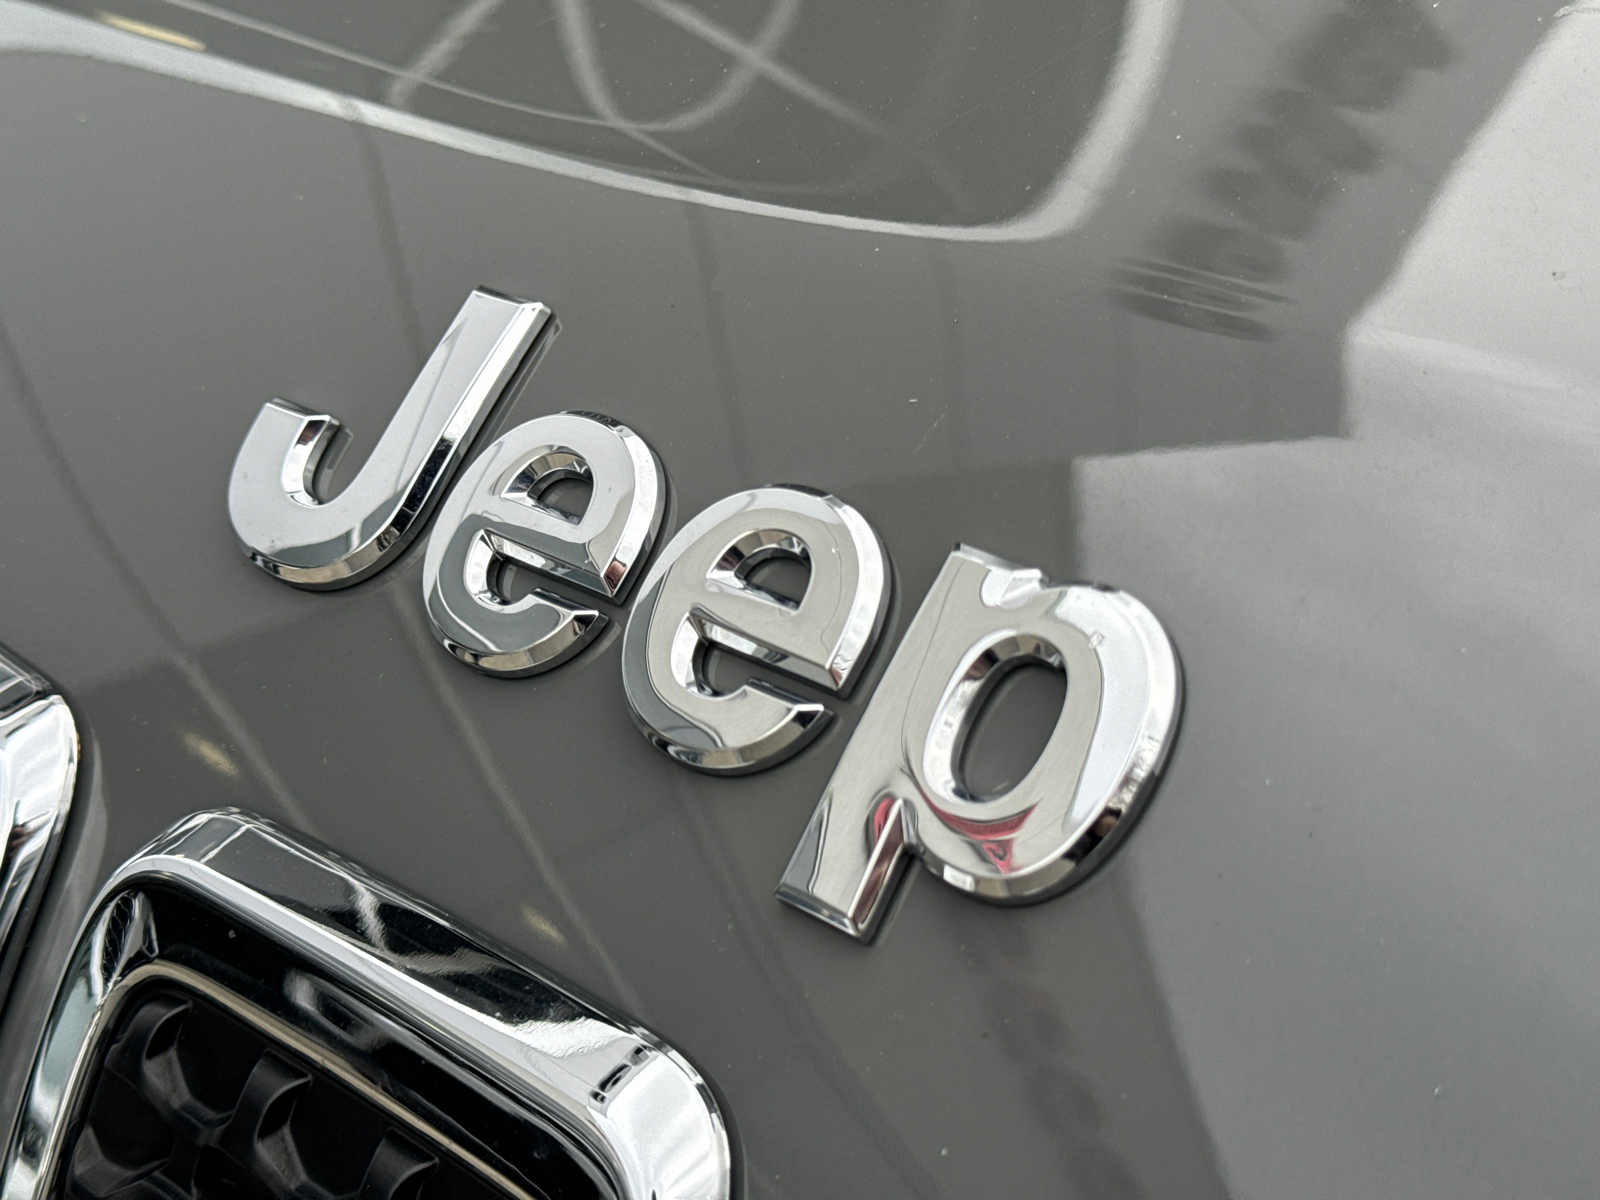 2021 Jeep Cherokee Limited 11